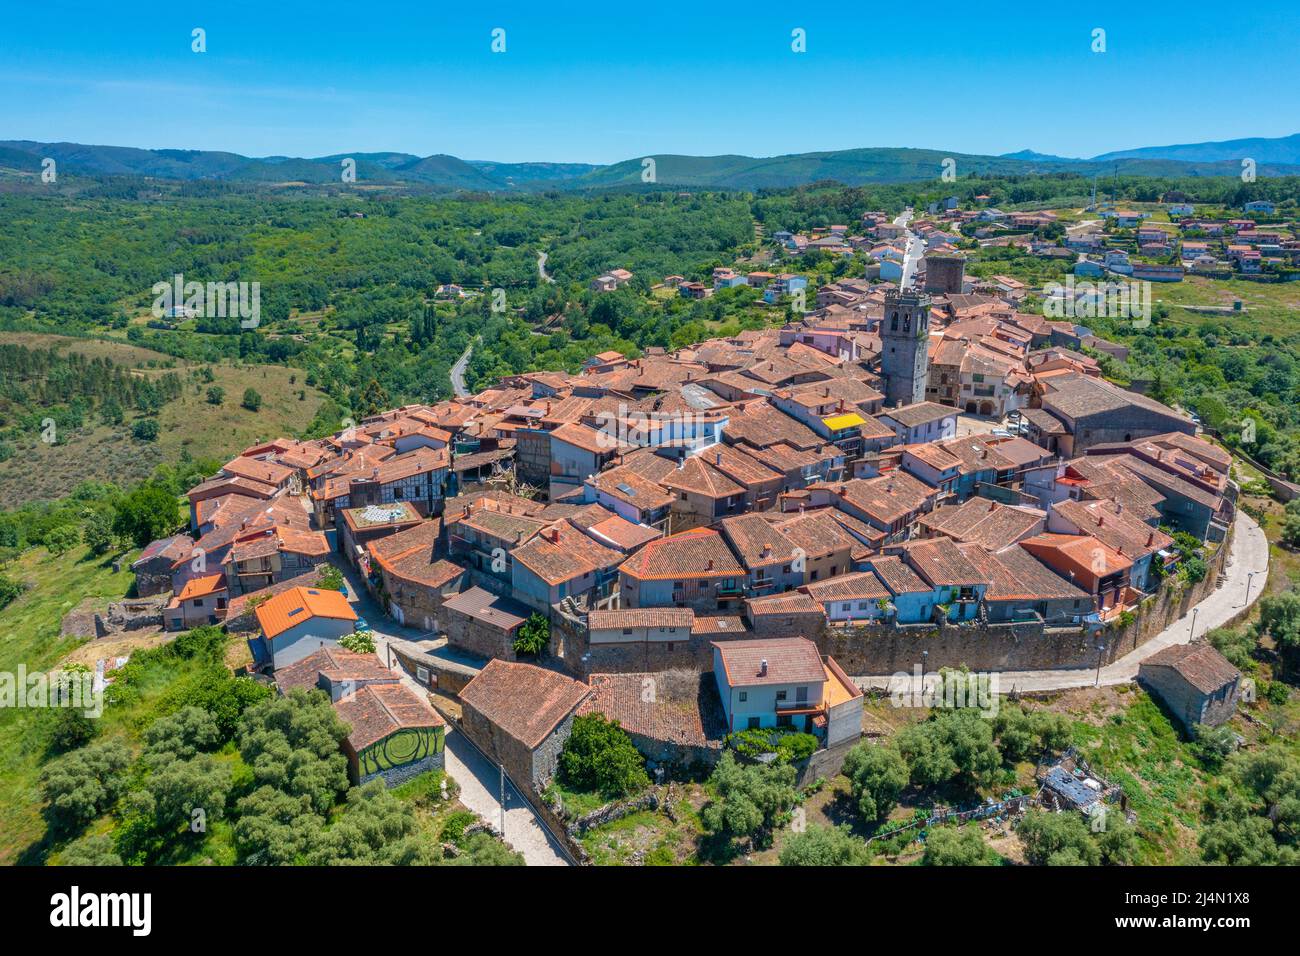 Aerial view of Miranda del Castanar village in Spain Stock Photo